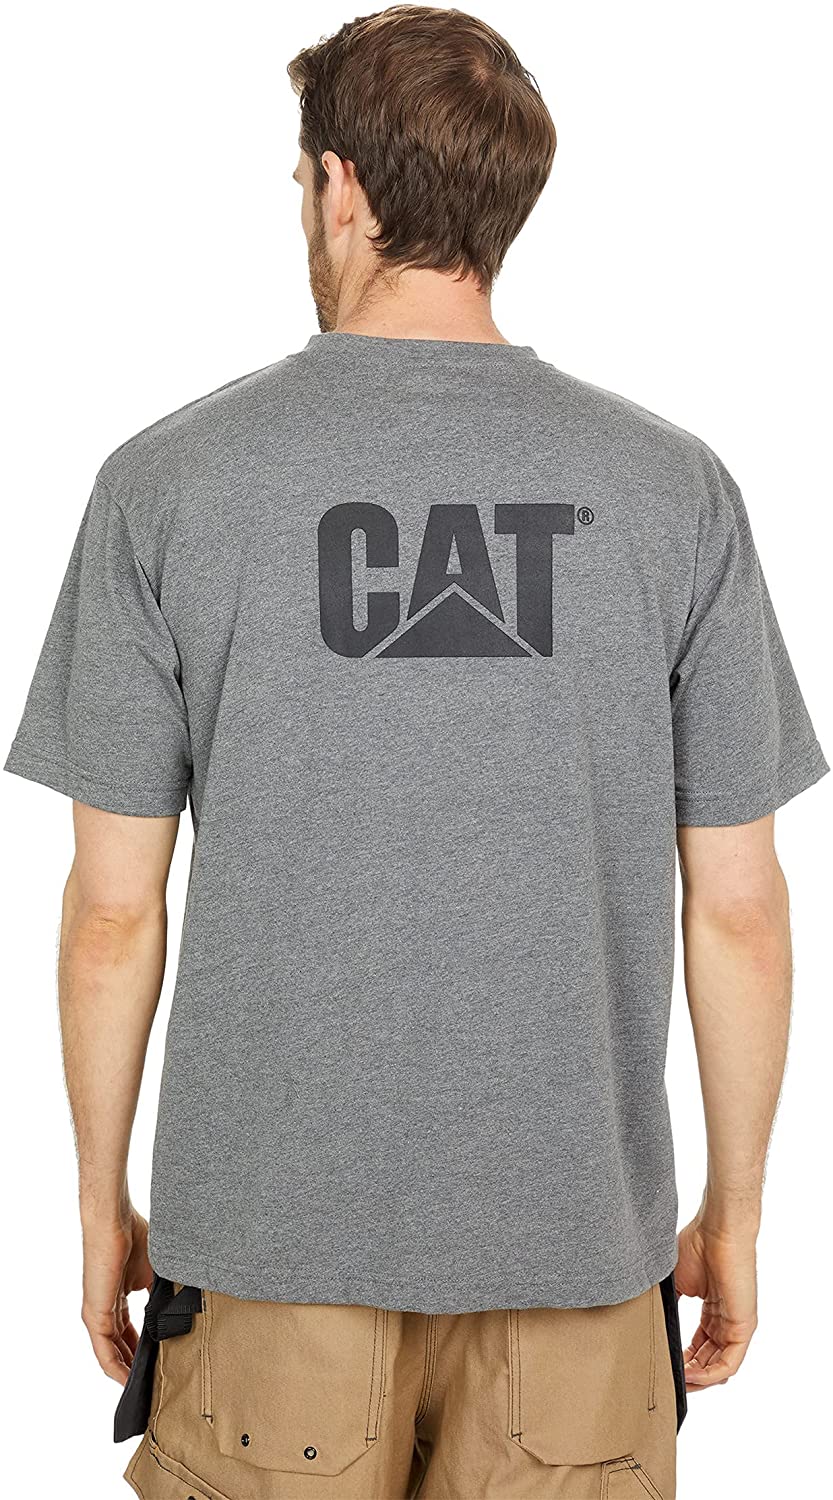 Men's Caterpillar Trademark T-Shirt in Dark Heather Grey